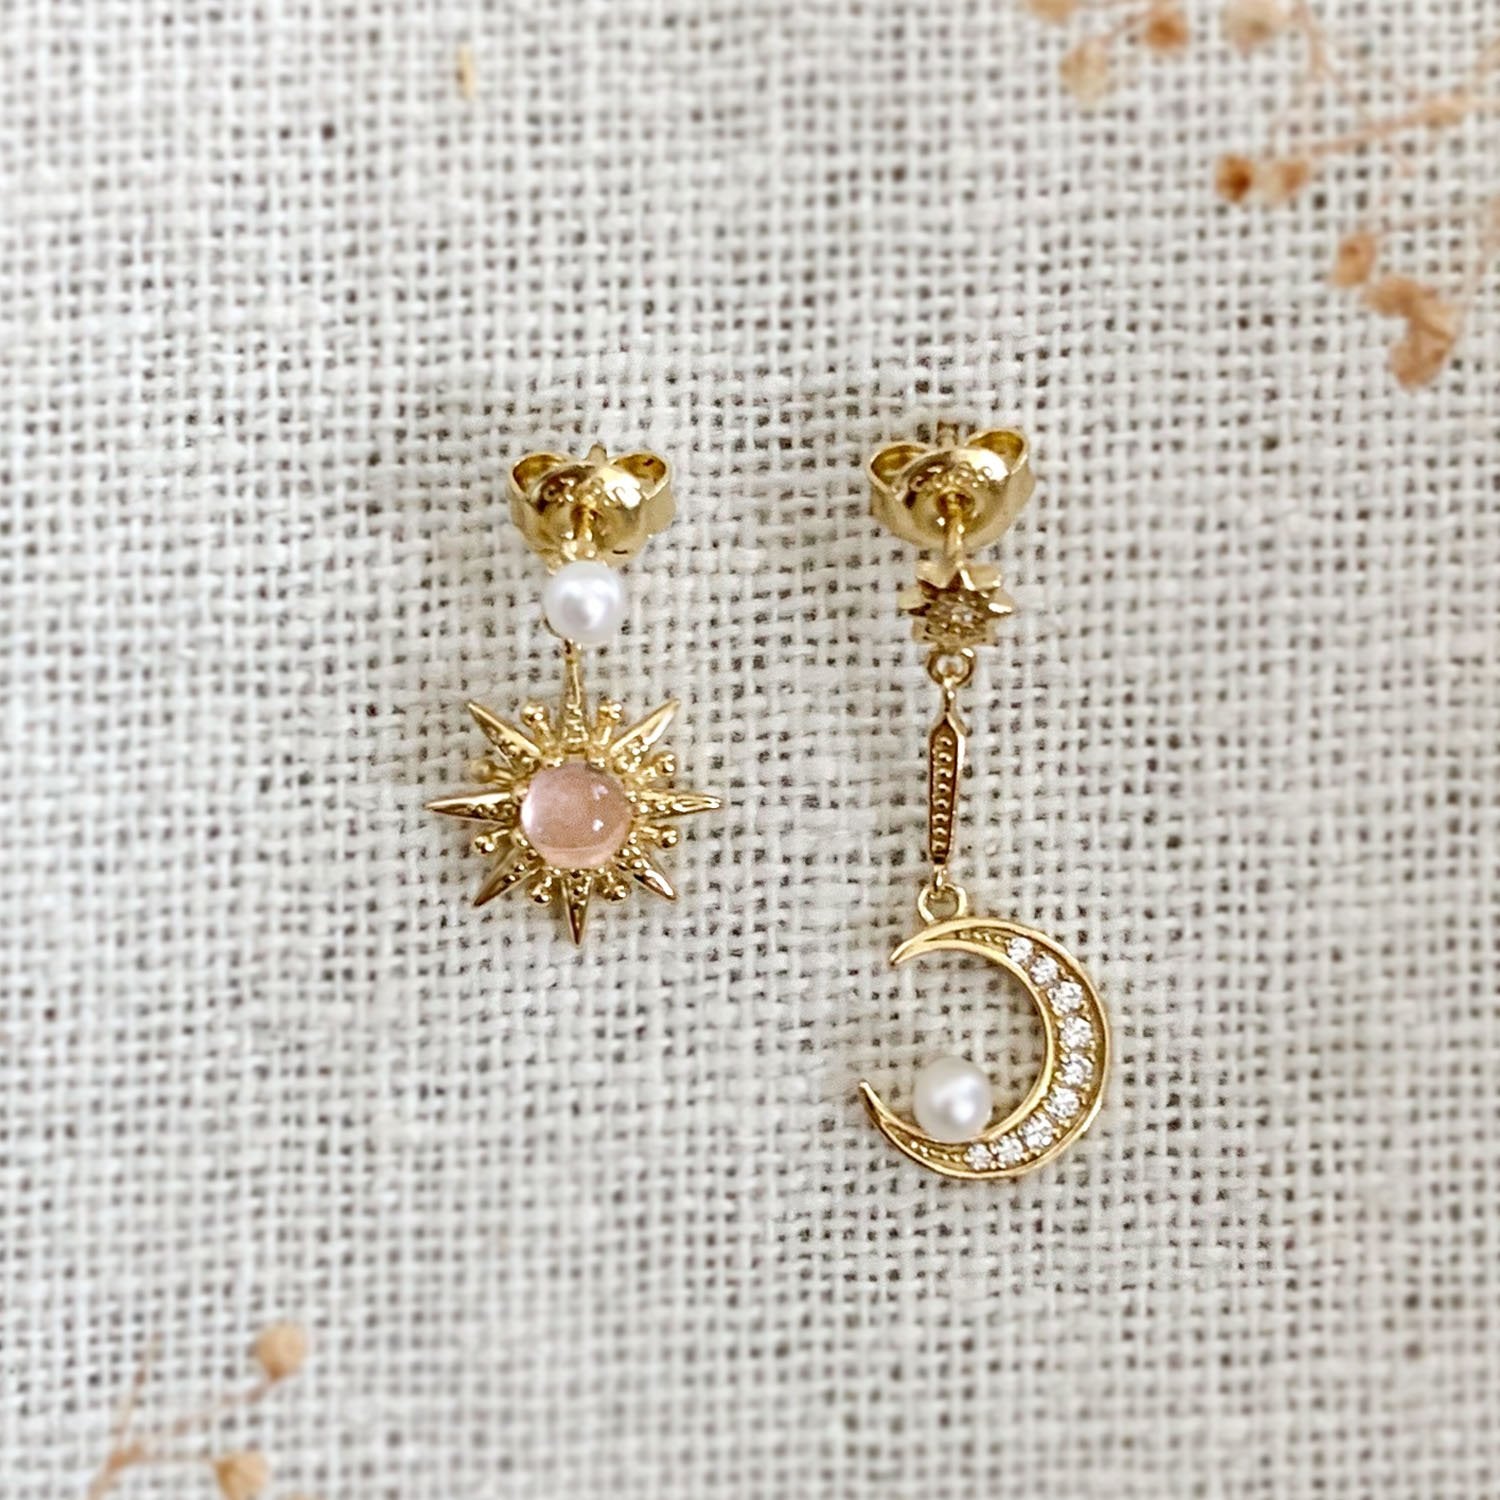 moon star drop earrings asymmetrical style handmade 18k gold vermeil rose quartz pearl cubic zirconia stones boho chic refined jewelry kemmi collection